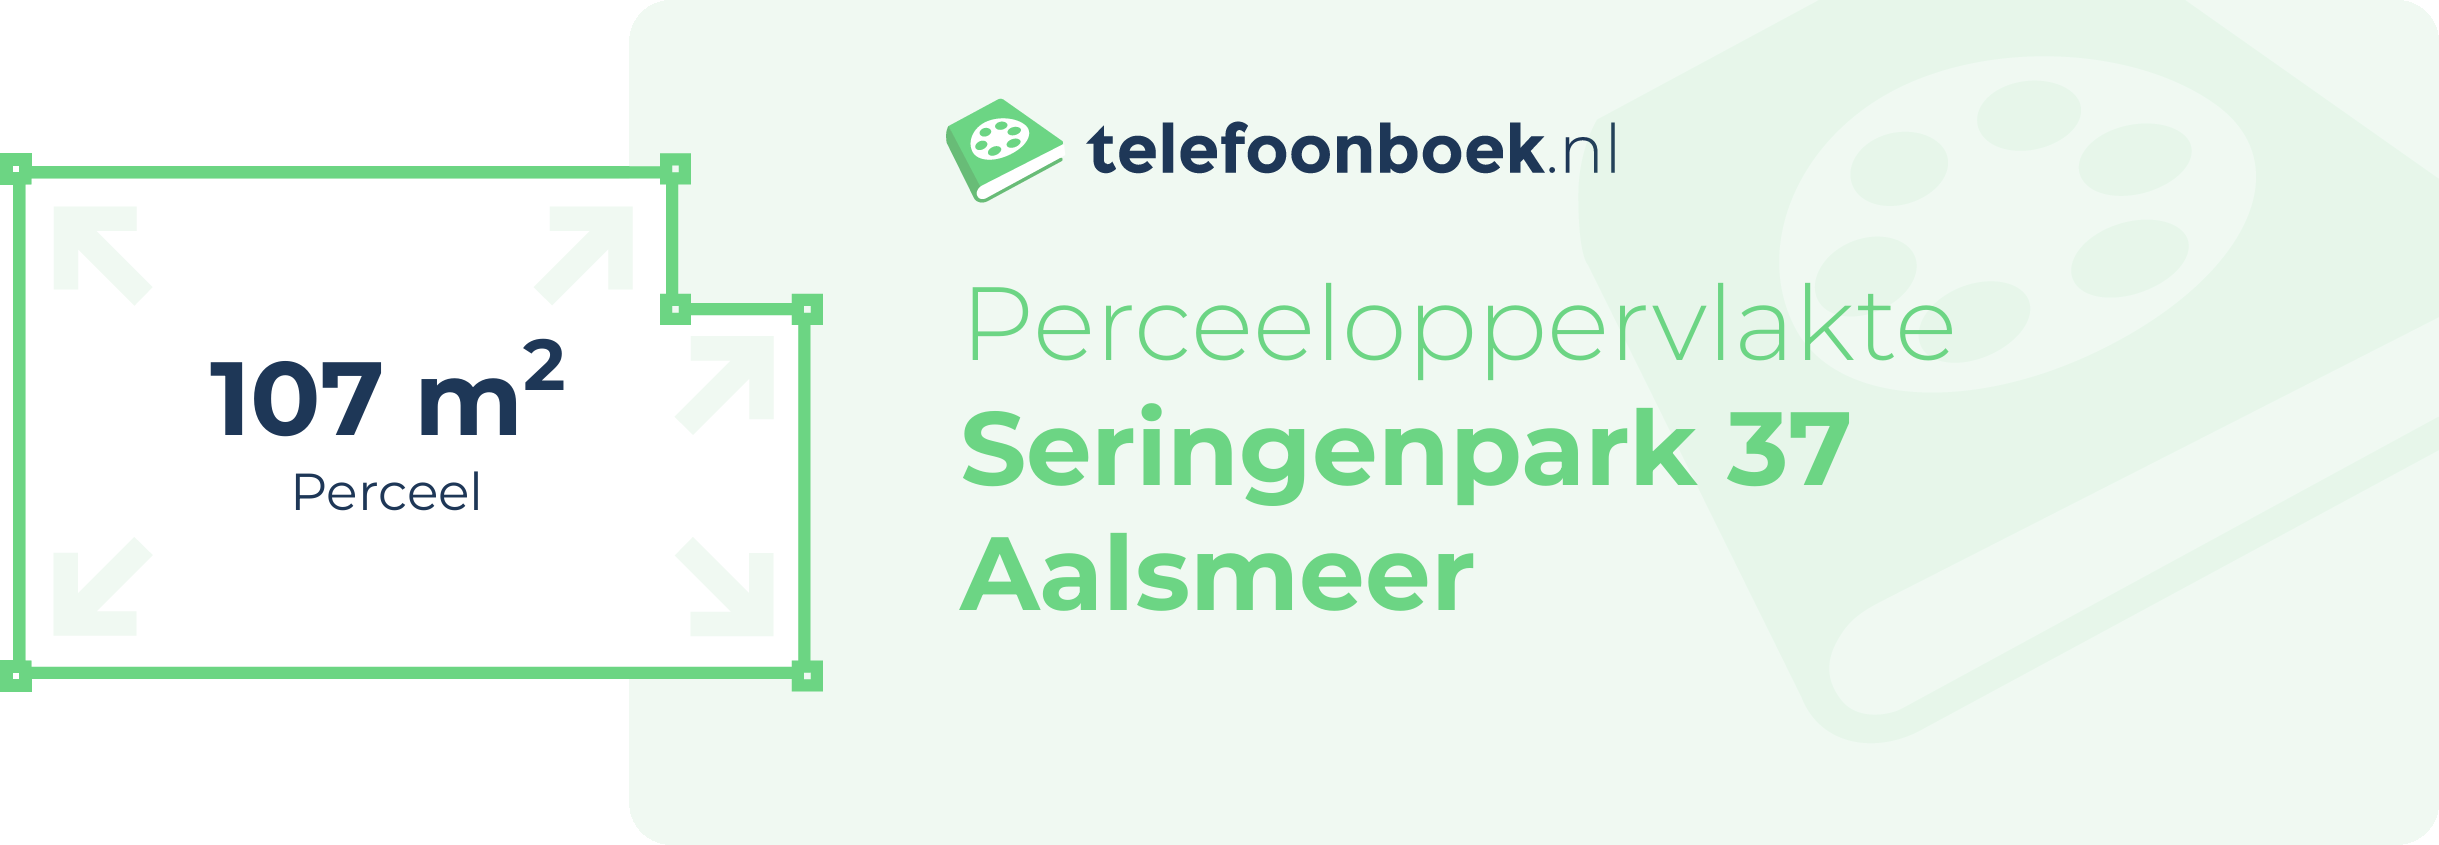 Perceeloppervlakte Seringenpark 37 Aalsmeer